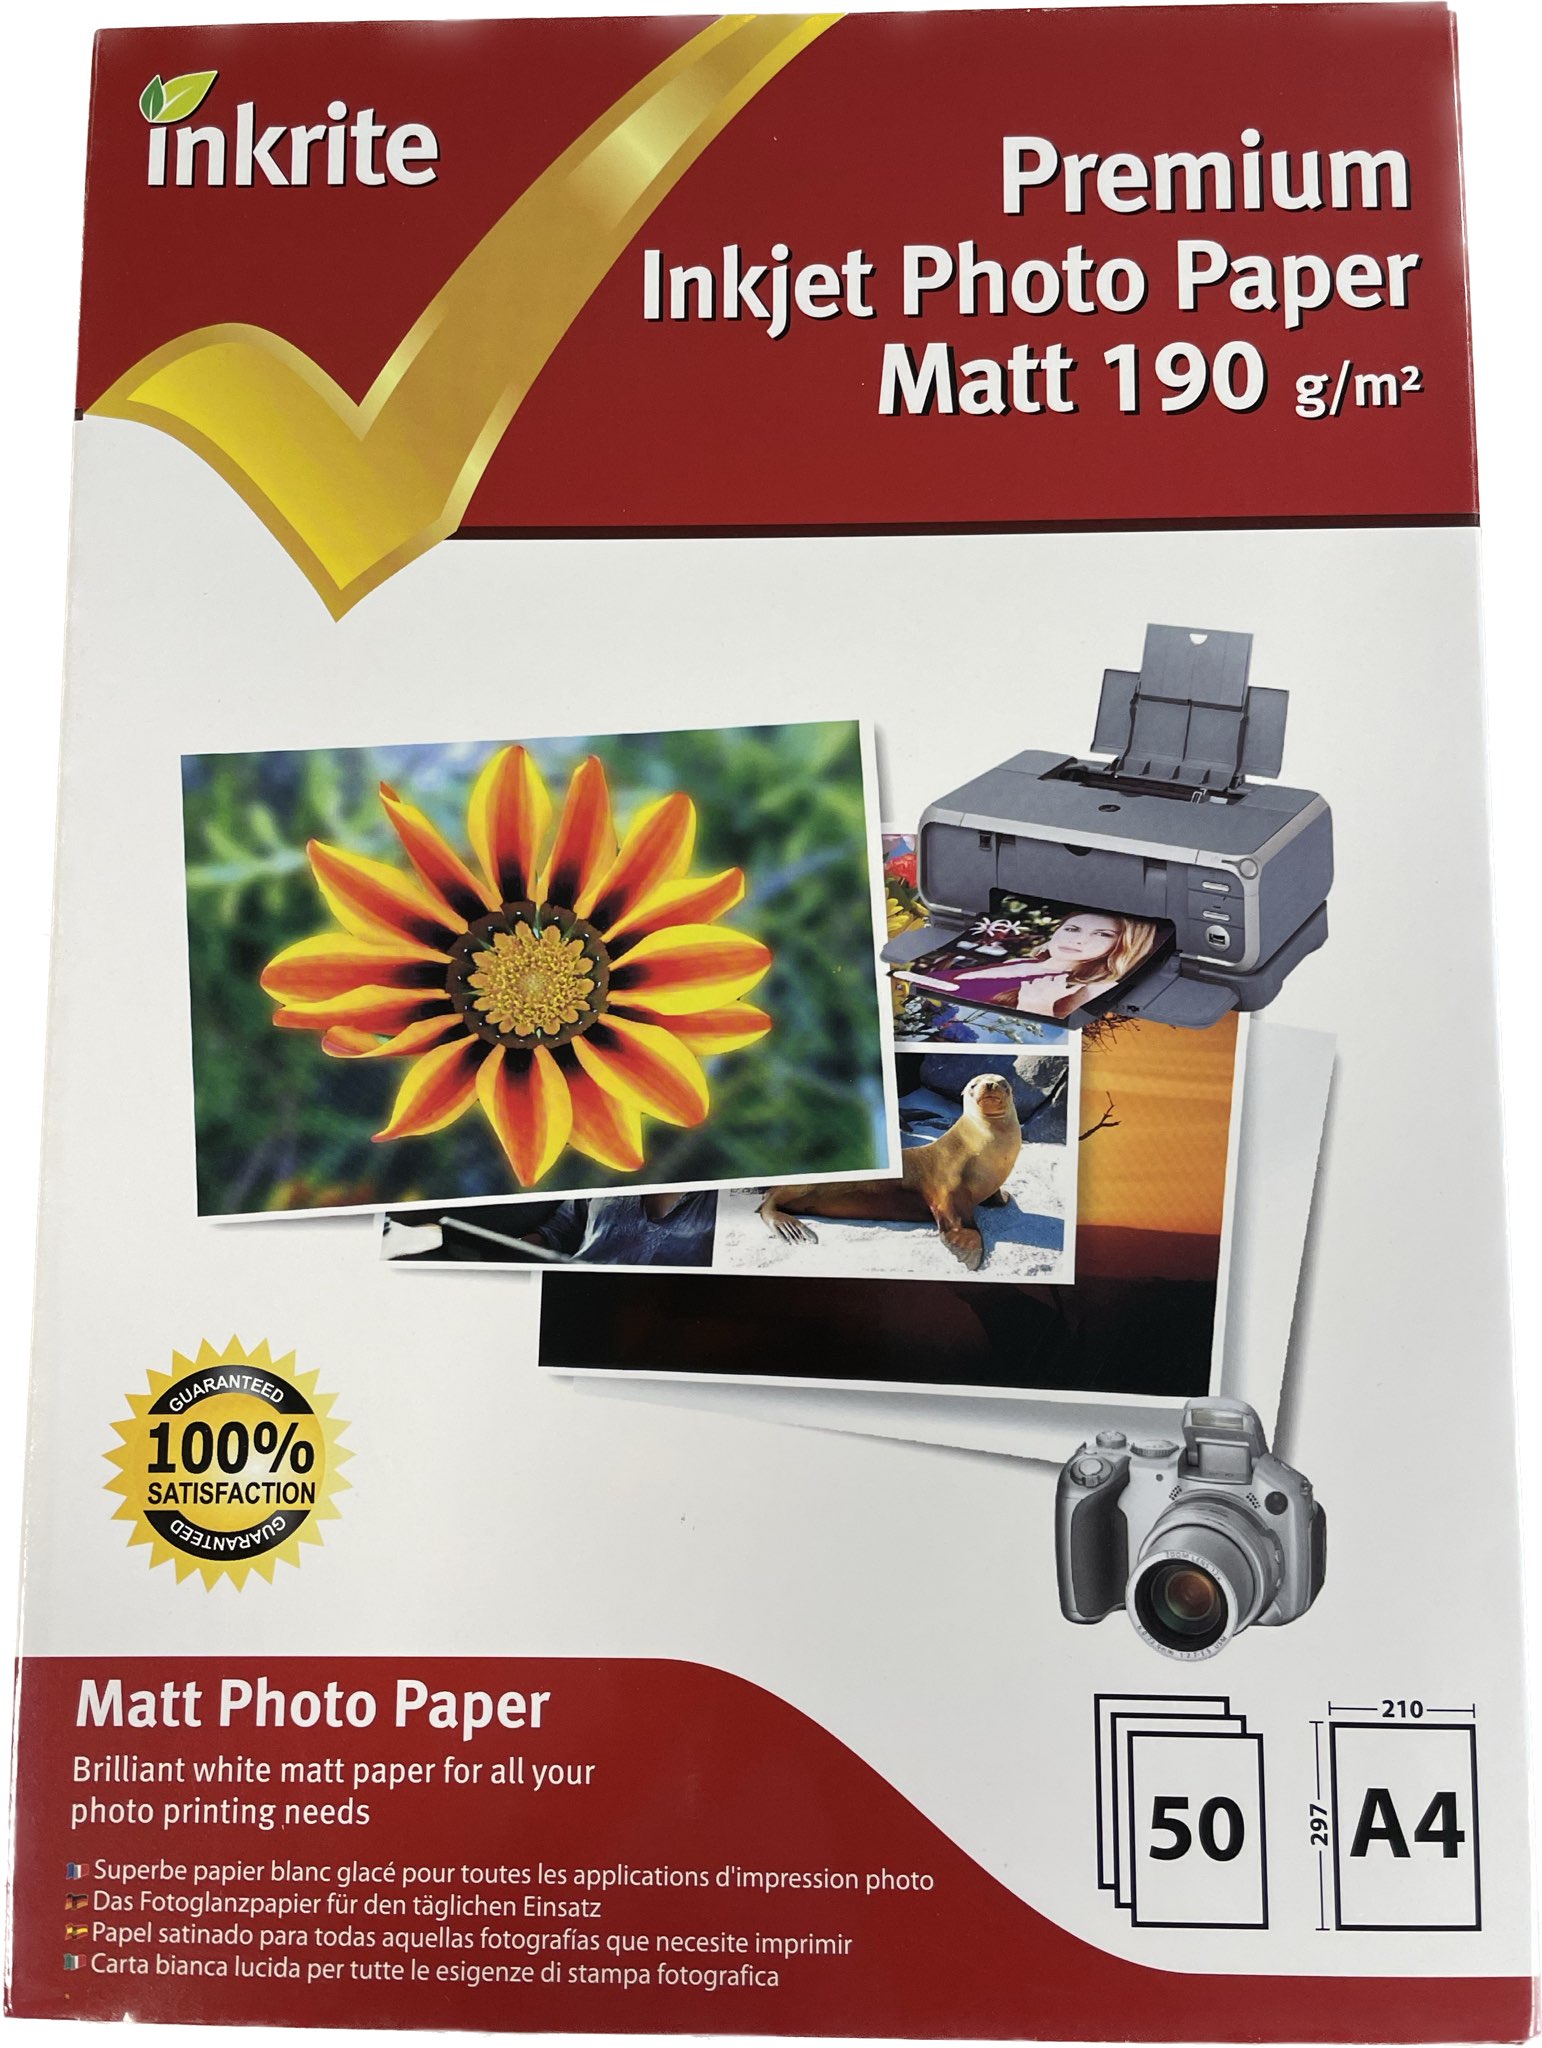 Inkrite Premium Quality Inkjet Photo Paper A4 Matt 190gsm 50 Sheets